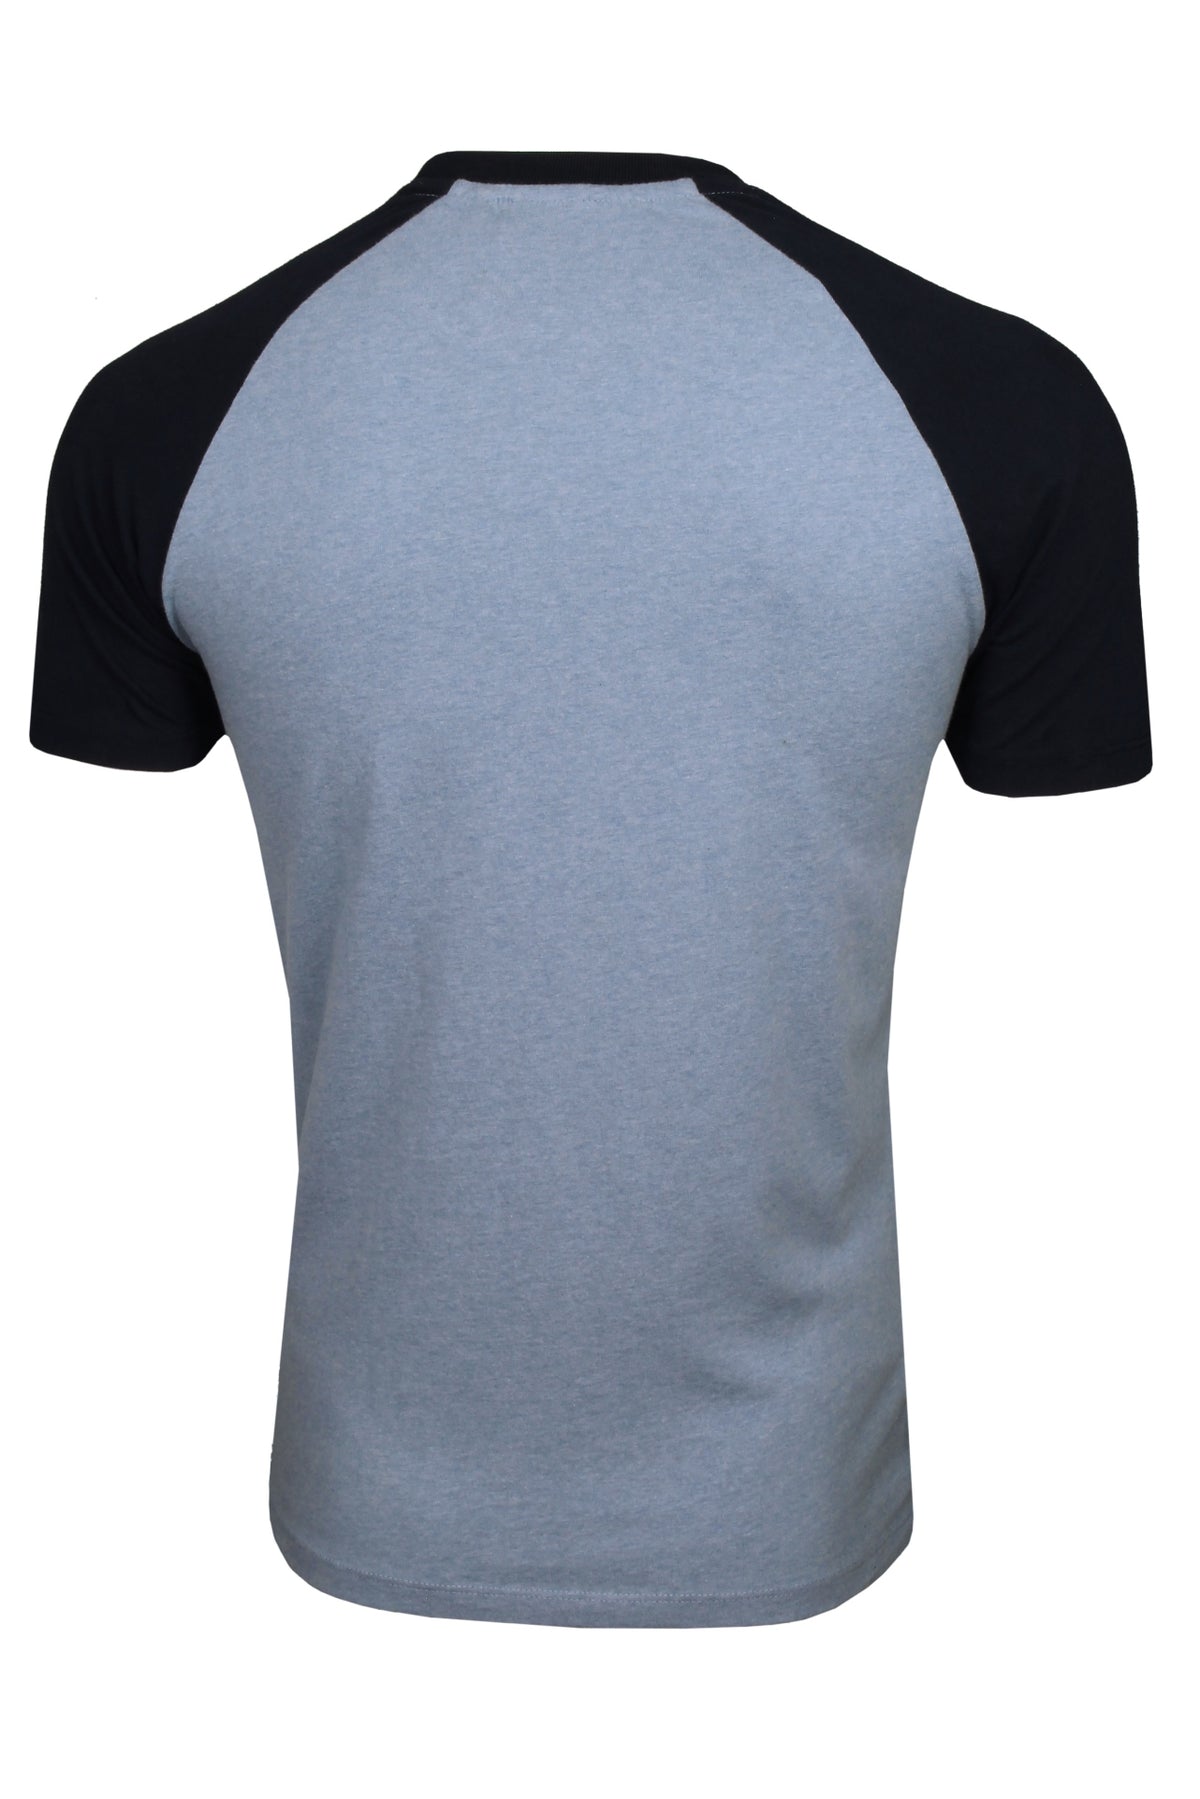 Superdry Mens Organic Cotton Essential Logo Baseball T-Shirt, 03, M1011838A, Stone Blue Marl/Eclipse Navy